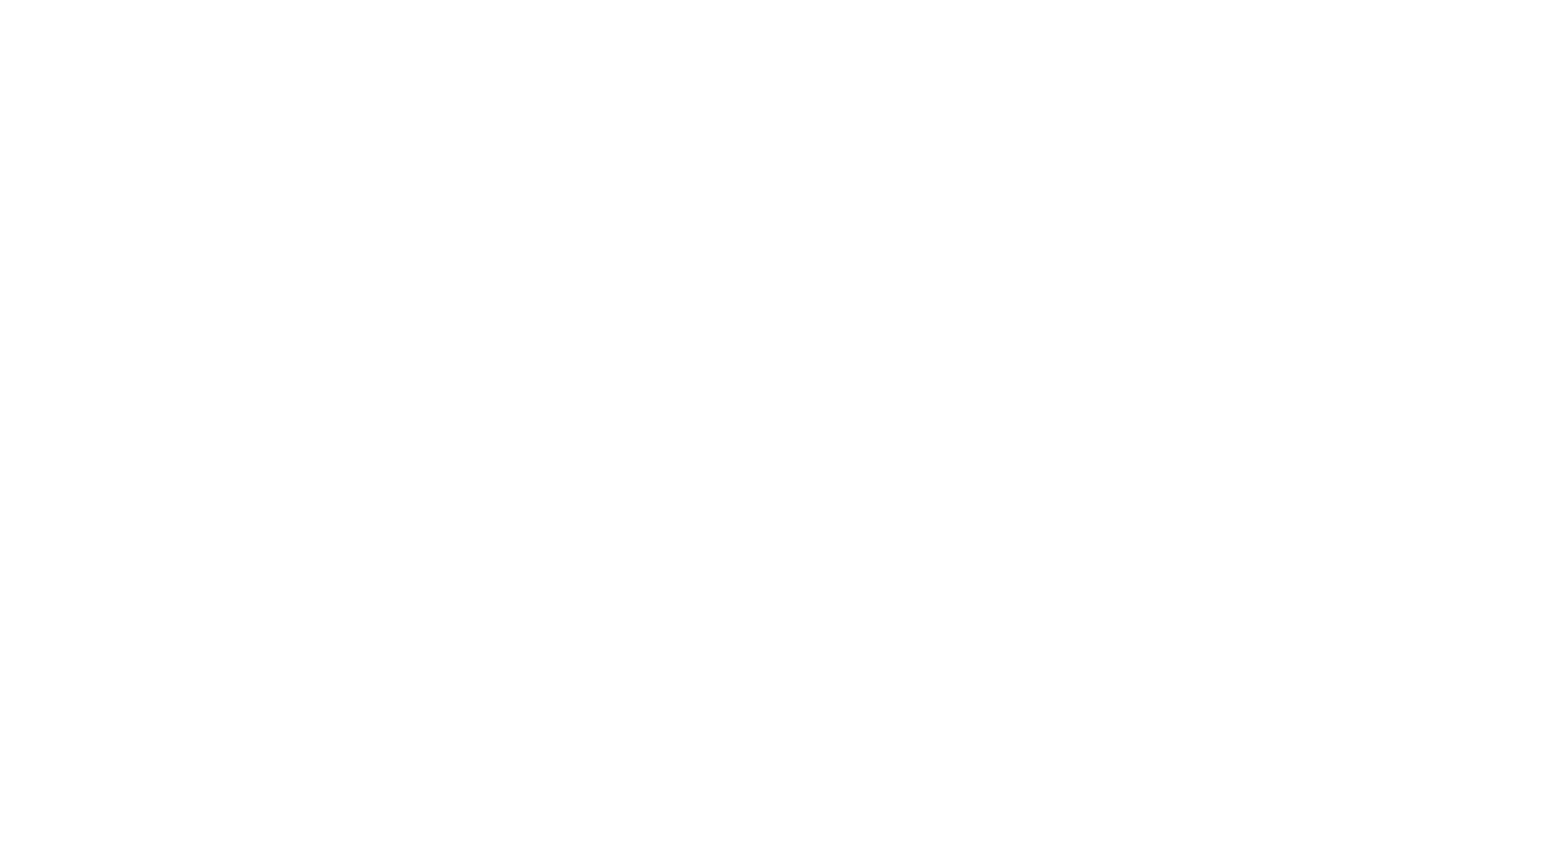 ALPS Advisors Inc logo for dark backgrounds (transparent PNG)